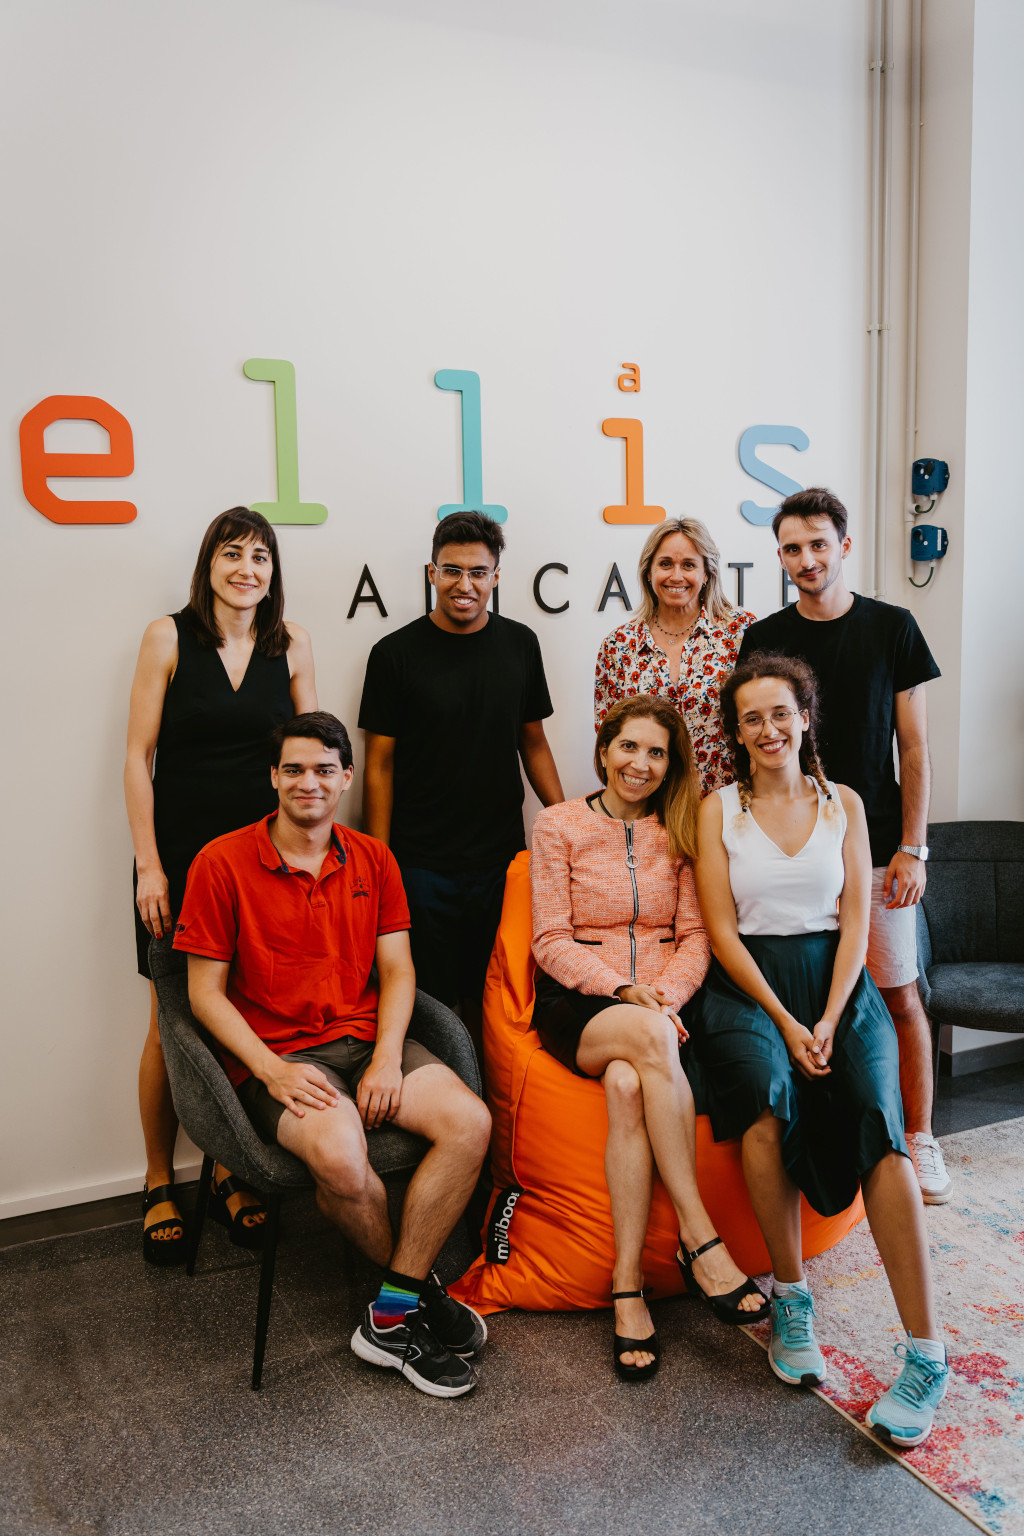 The ELLIS Alicante team, 7 people under the ELLIS sign